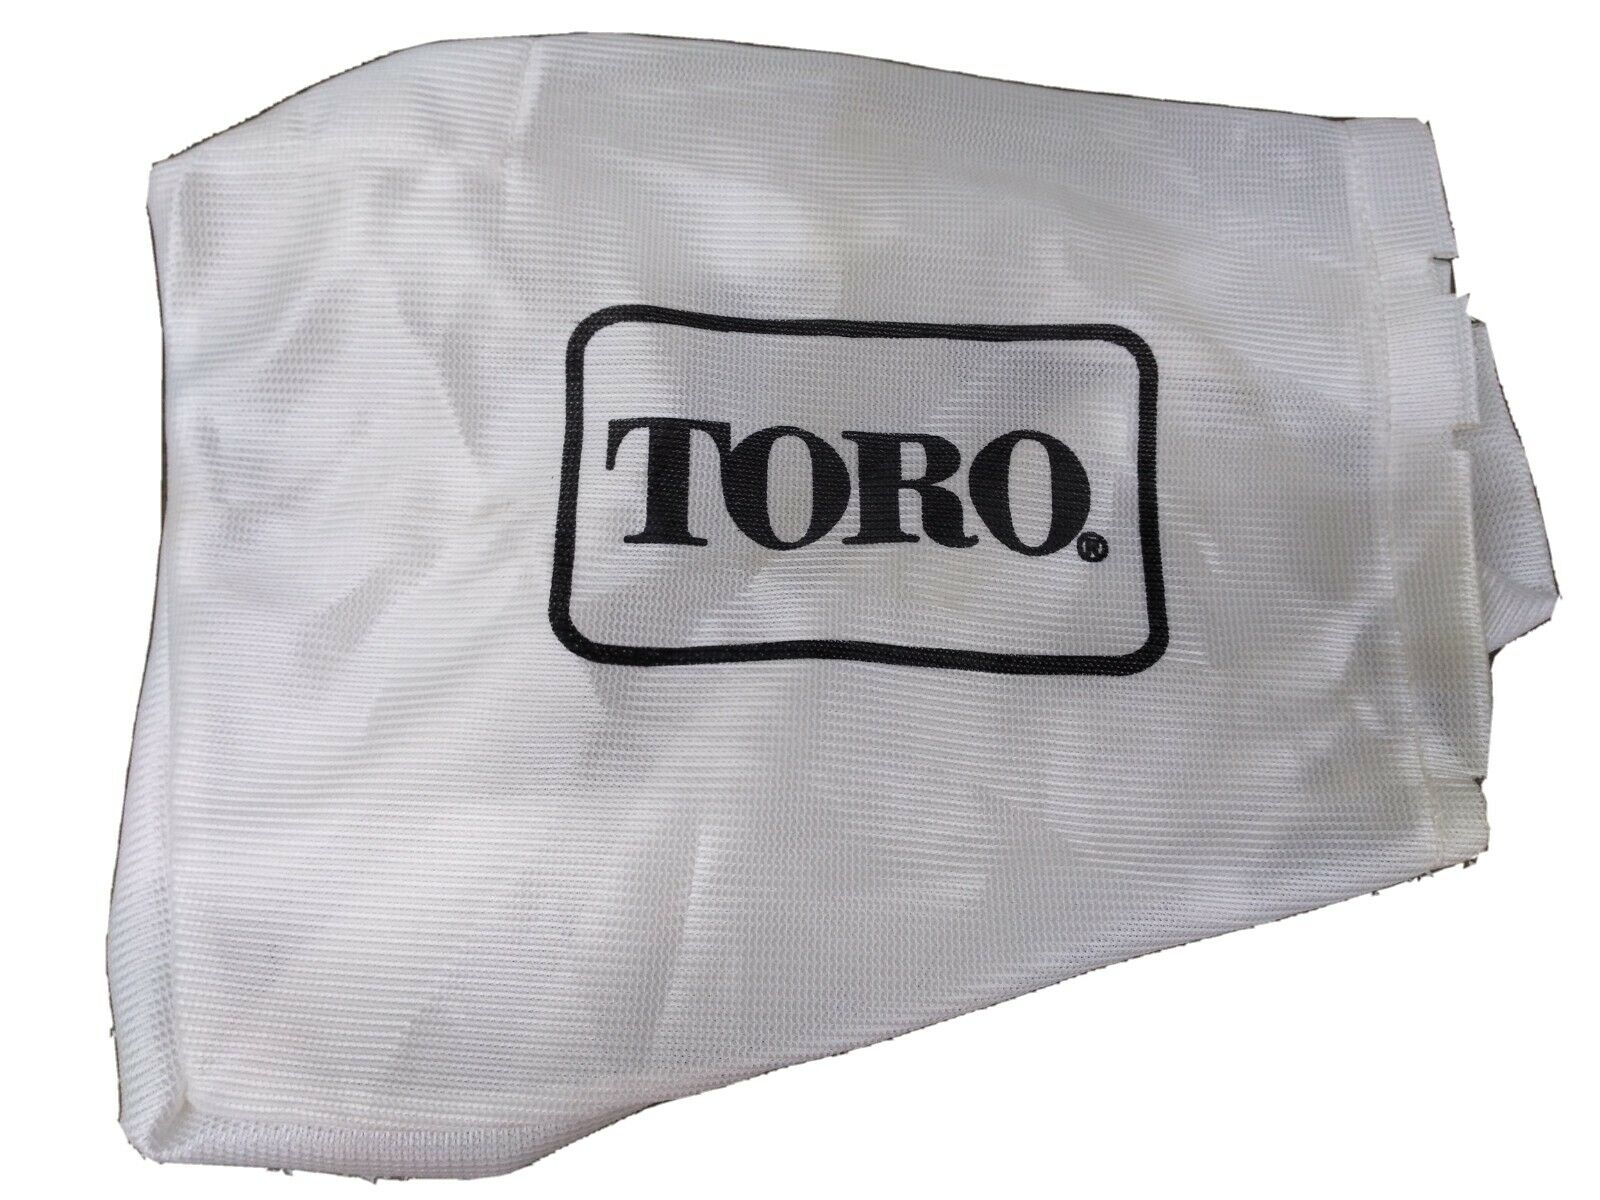 TORO Walk Power Mower Replacement Bag #93-0284